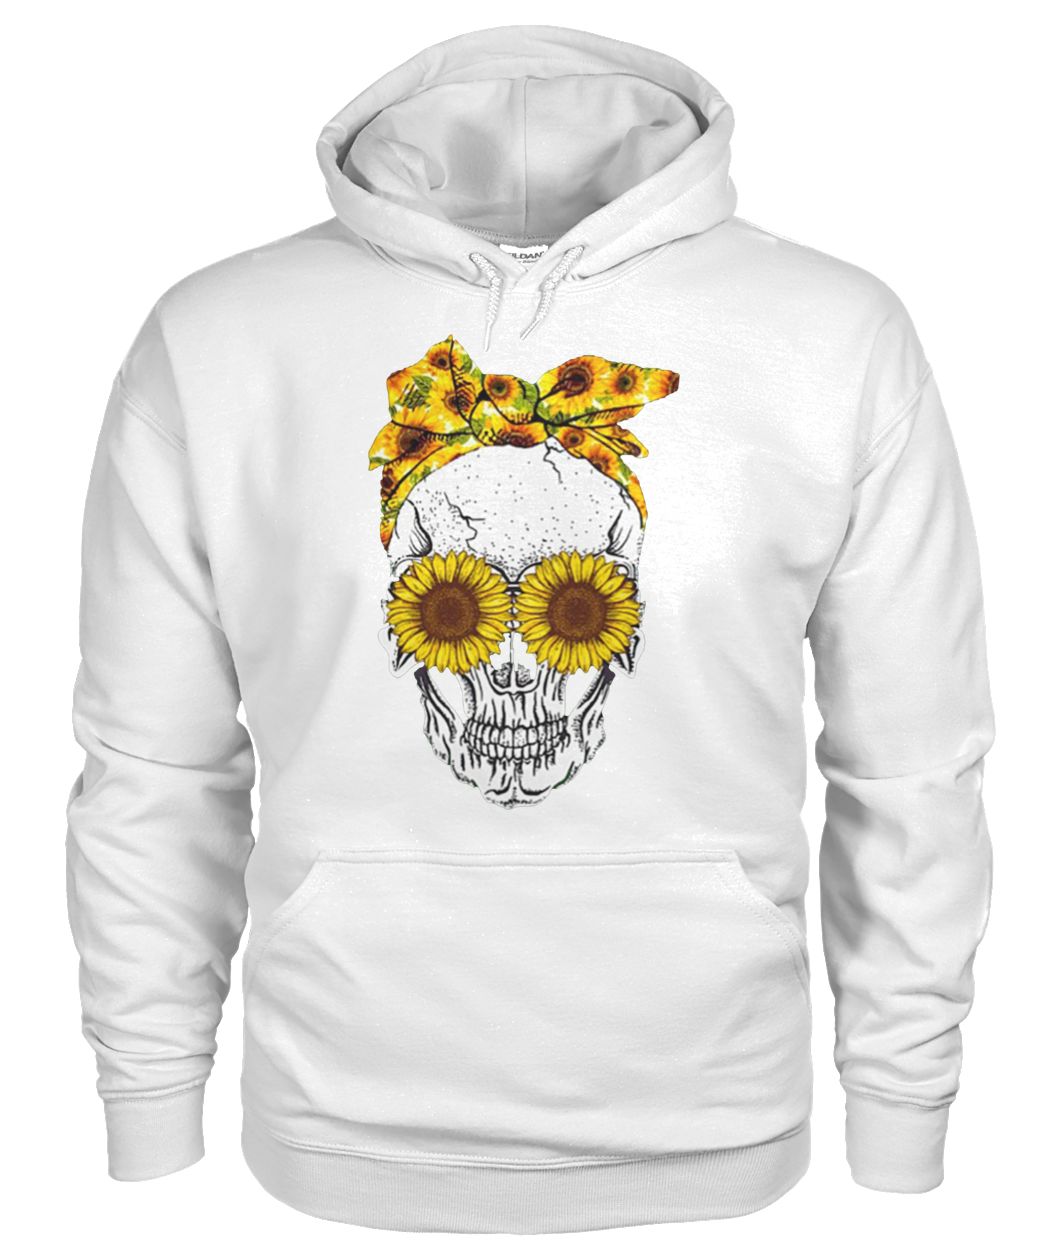 Sunflower skull gildan hoodie